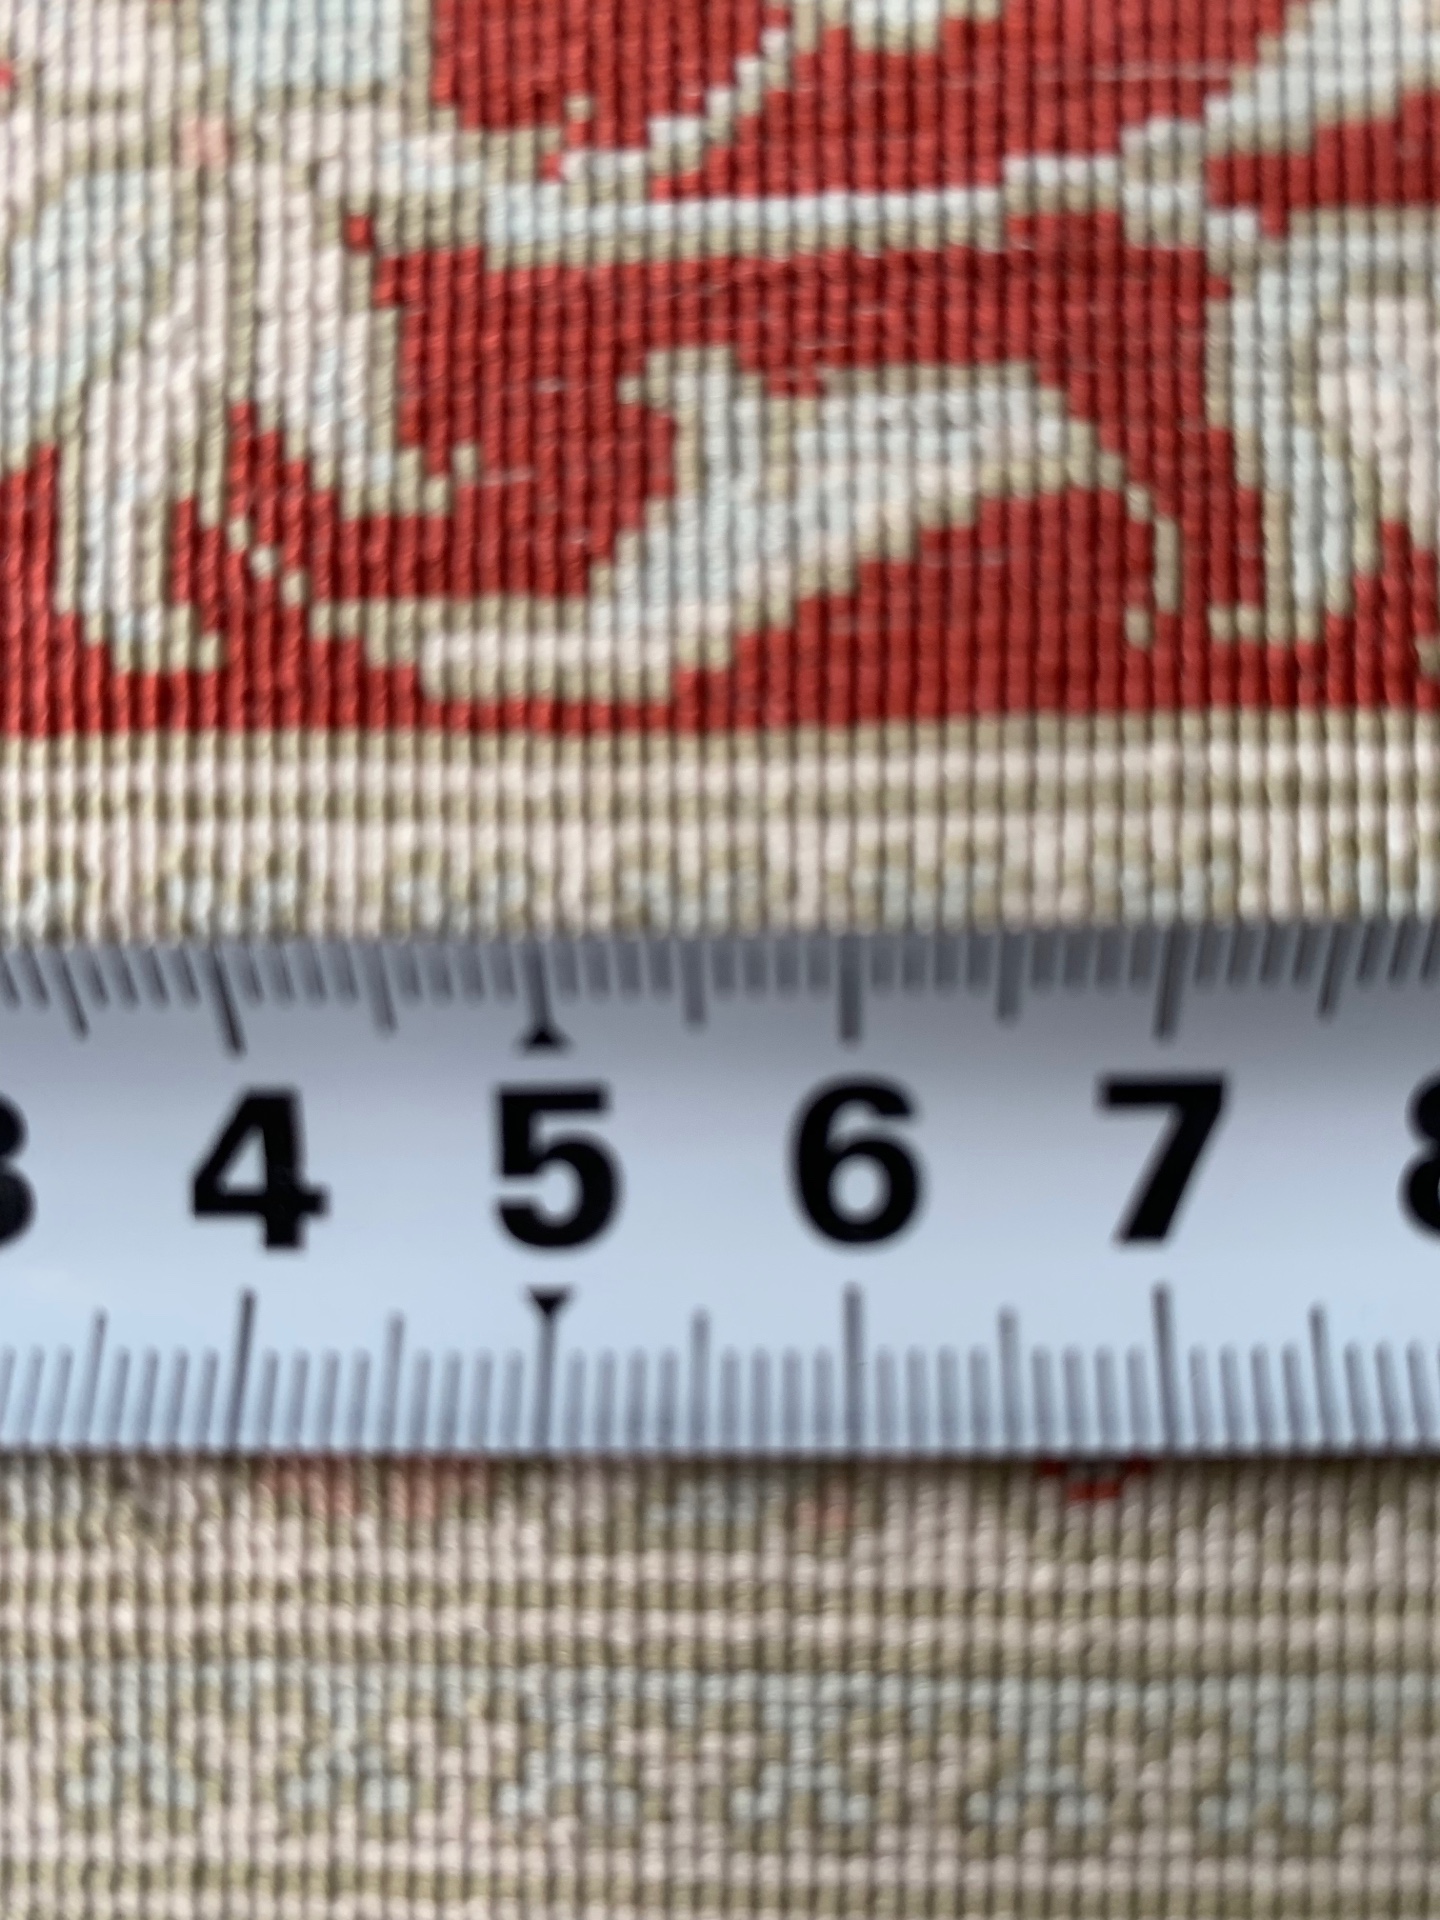 QM8118 クム 手織り ペルシャ絨毯 100×145